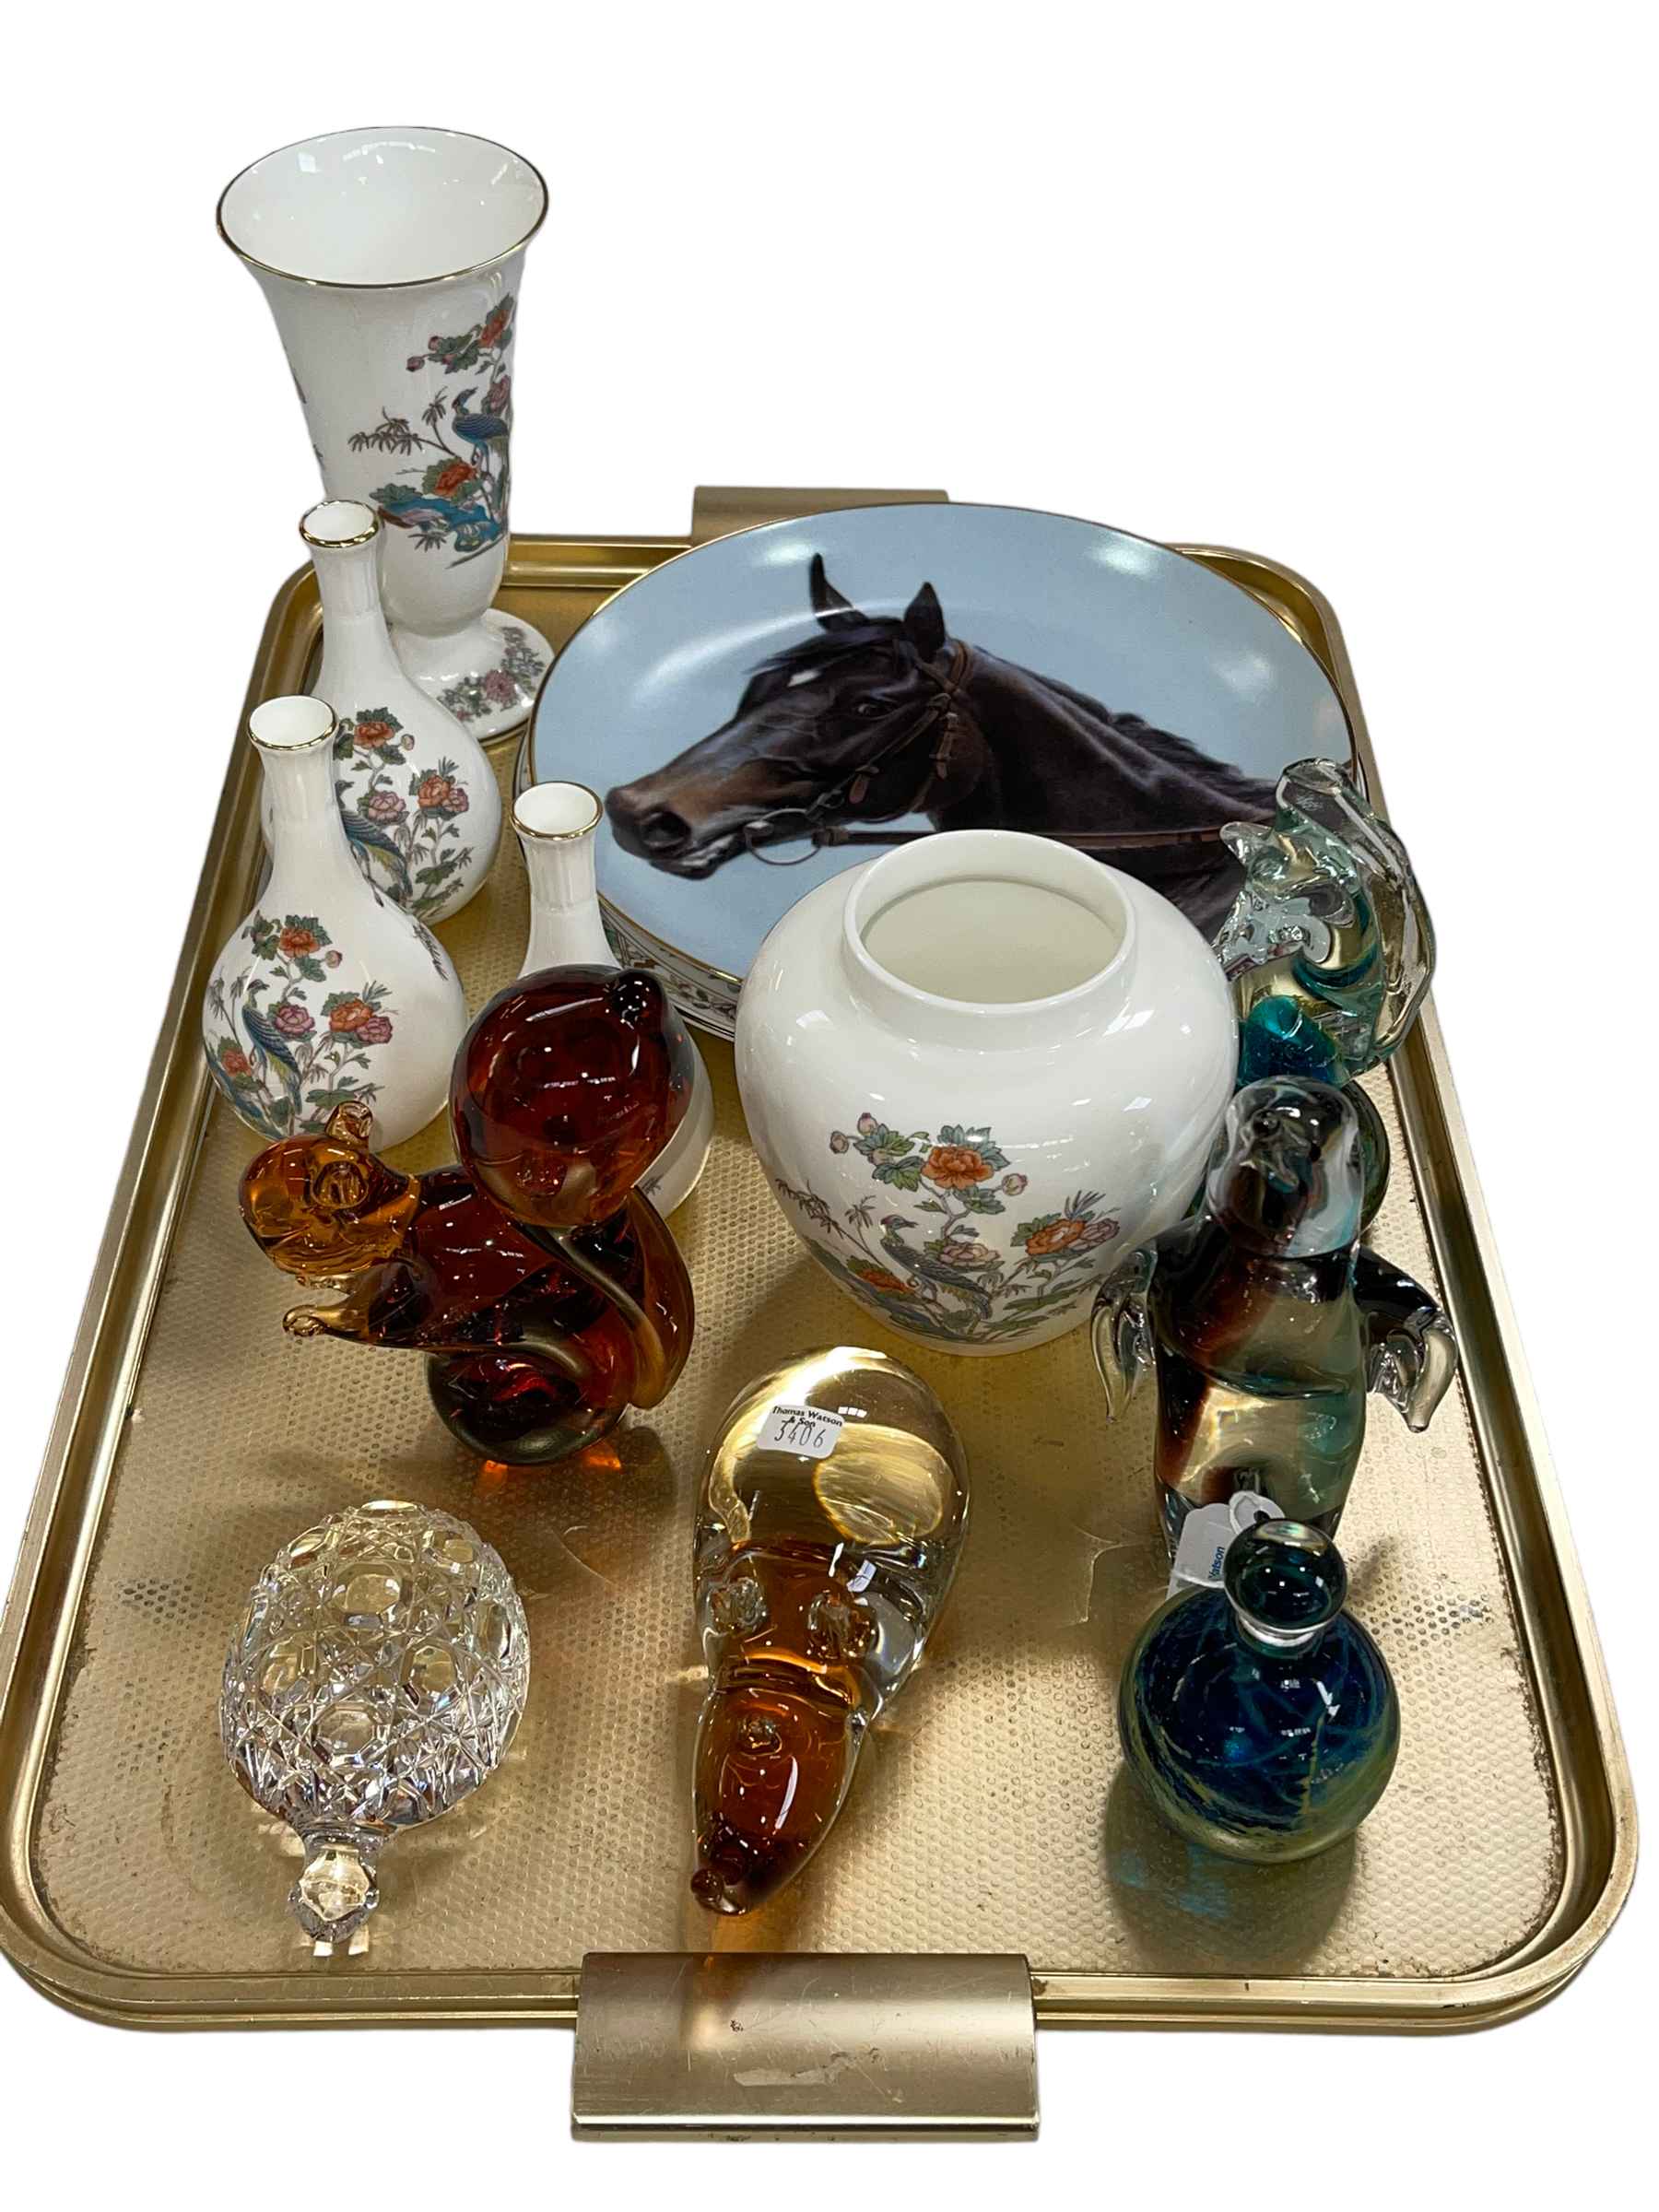 Glass animal paperweights, Wedgwood Kutani Crane, and Fred Stone plate.